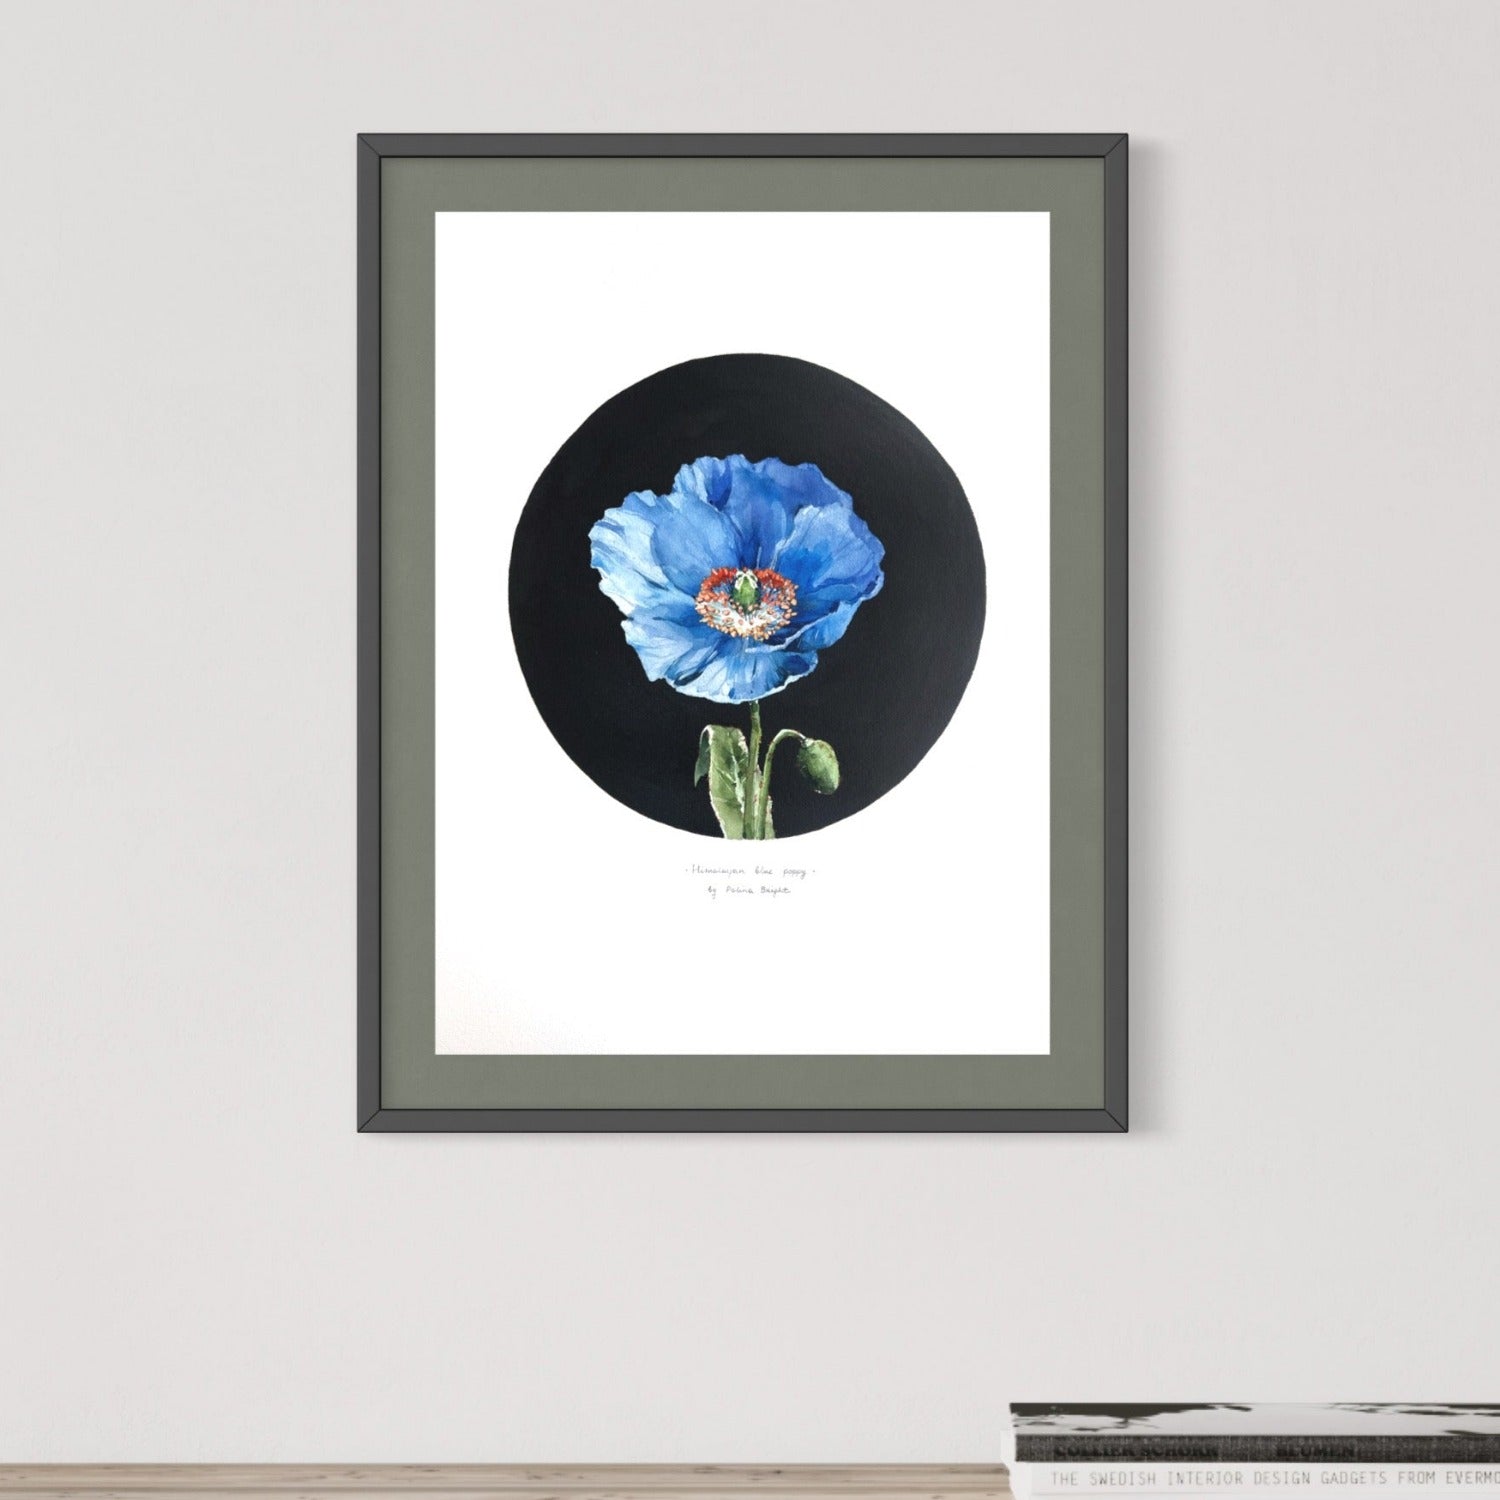 Himalayan blue poppy flower by Polina Bright